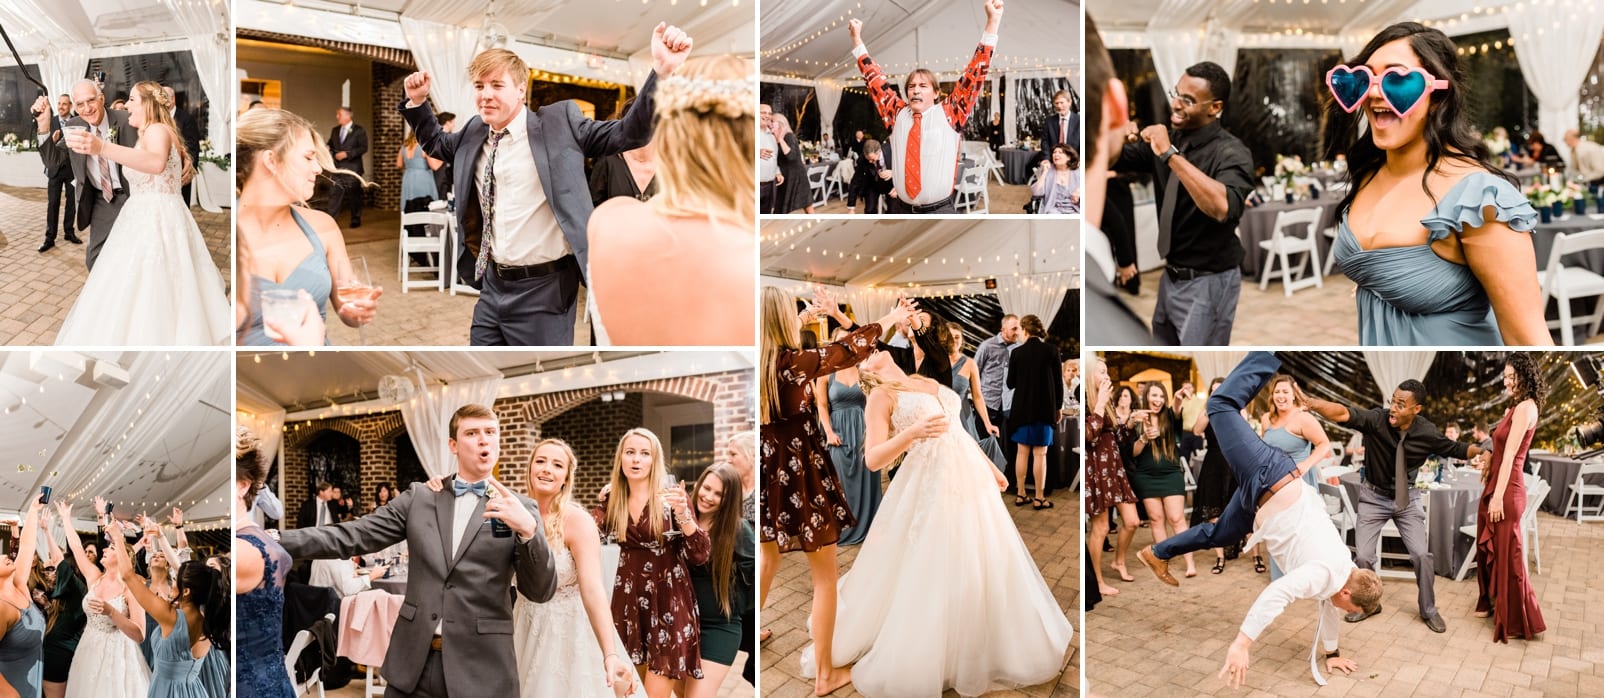 Oaks at Salem wedding reception dancing pictures photo